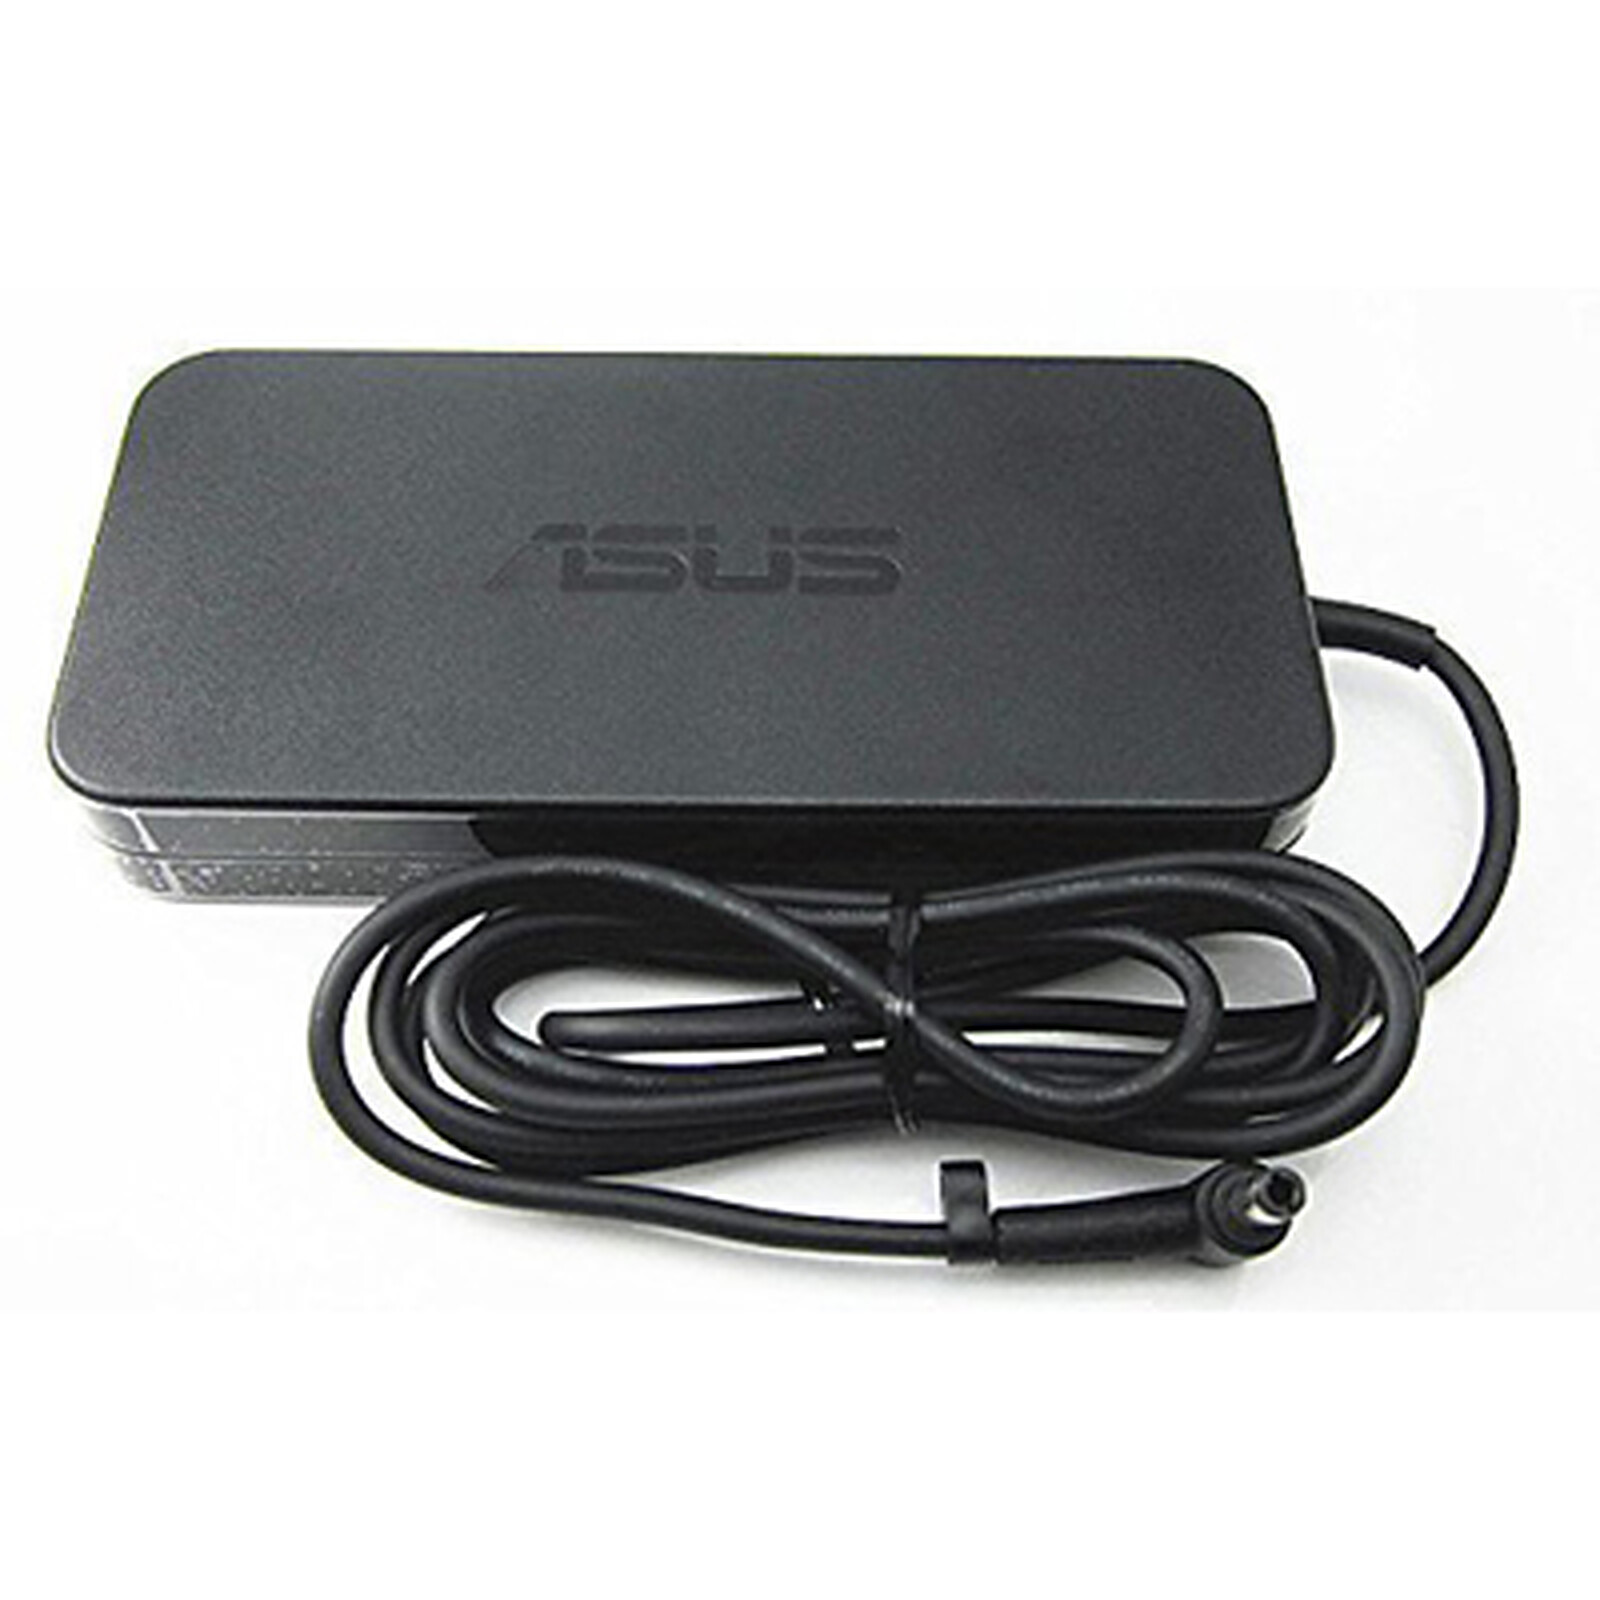 Advance PowerUp 90W ASUS (CHG-090AS) - Chargeur PC portable - Garantie 3  ans LDLC